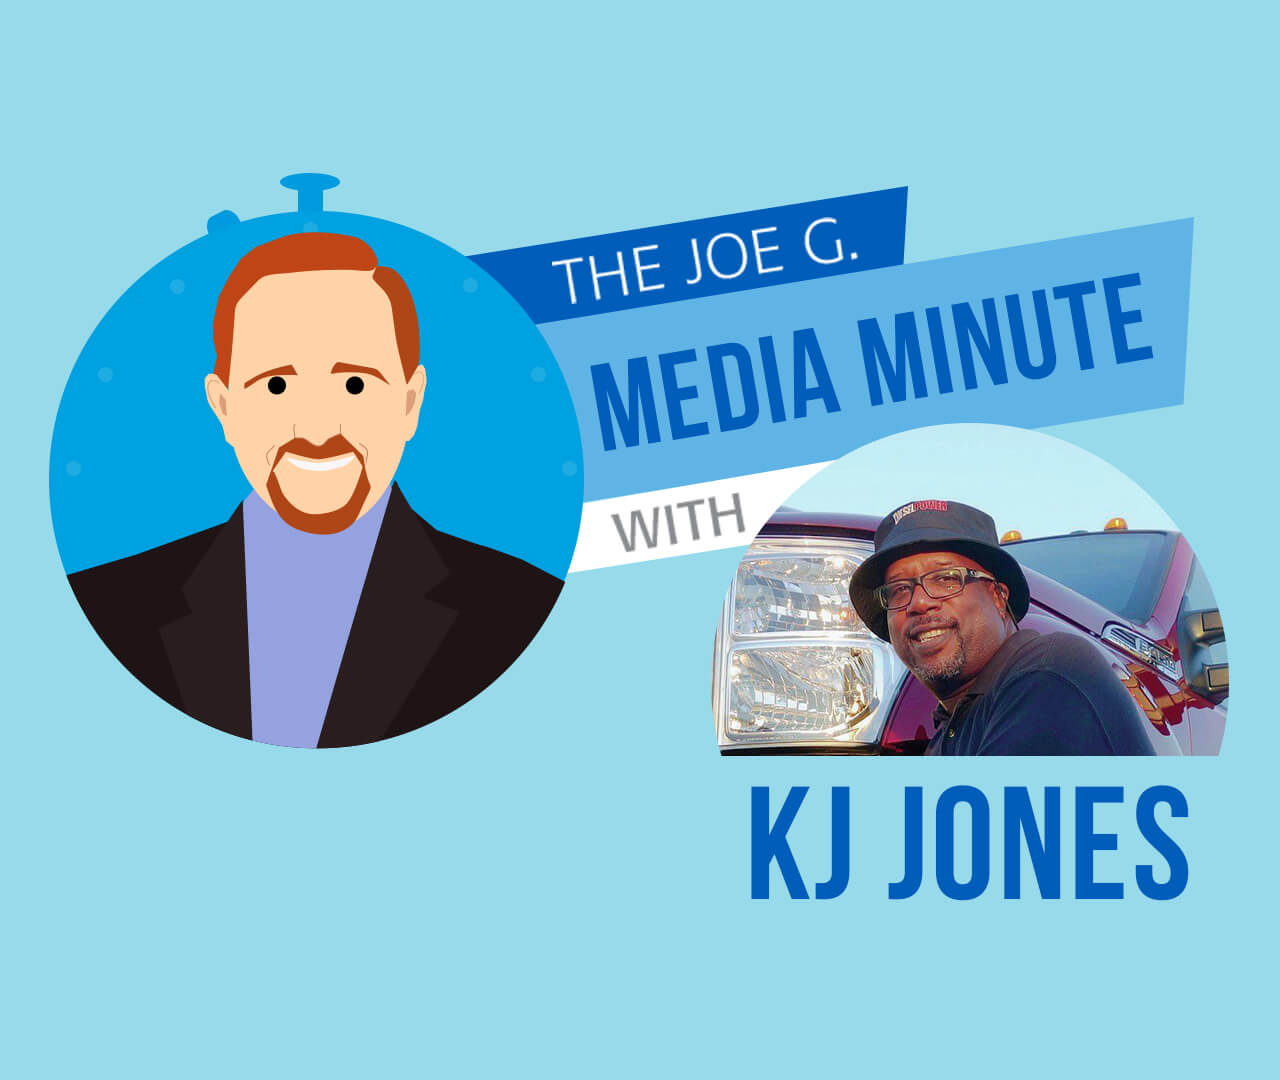 The Joe G. Media Minute with KJ Jones